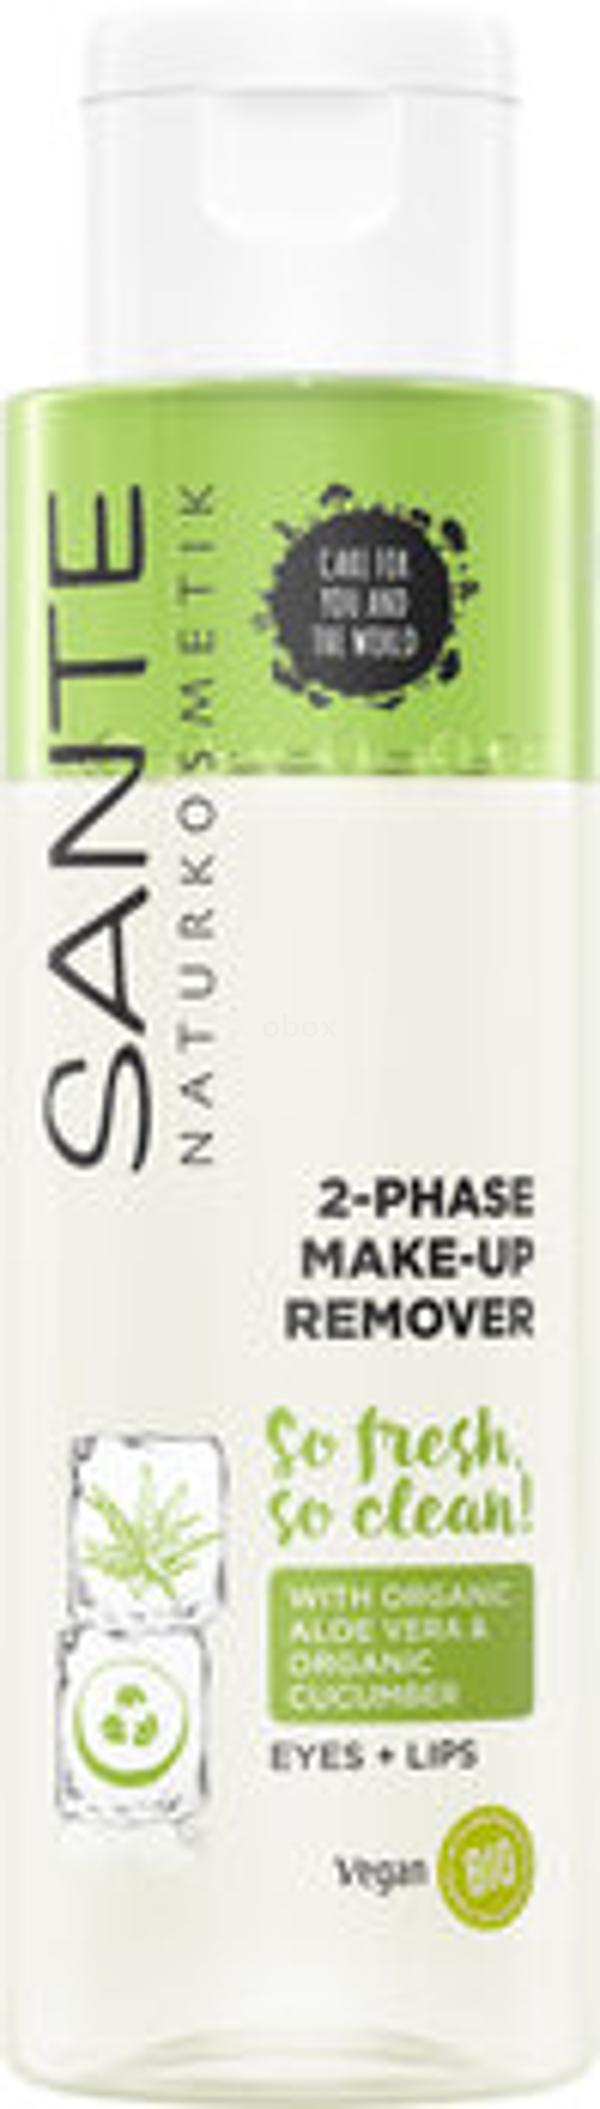 Produktfoto zu 2-Phase Make-up Remover 100ml